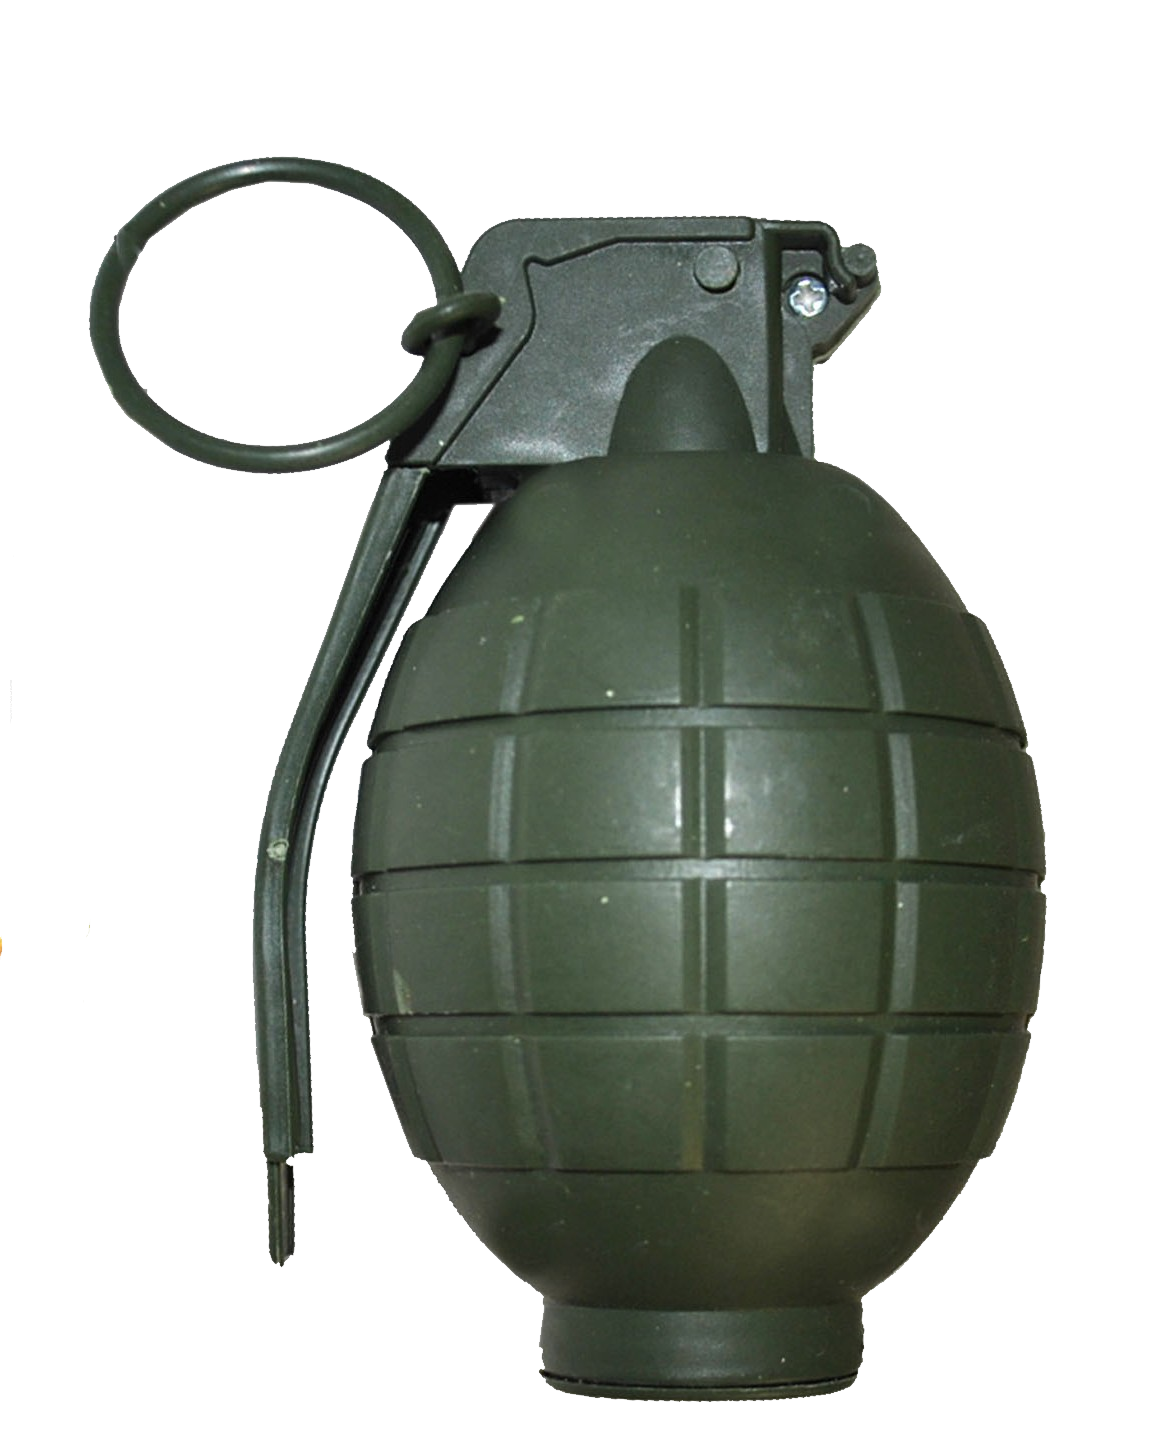 Download PNG image - Grenade PNG Image 